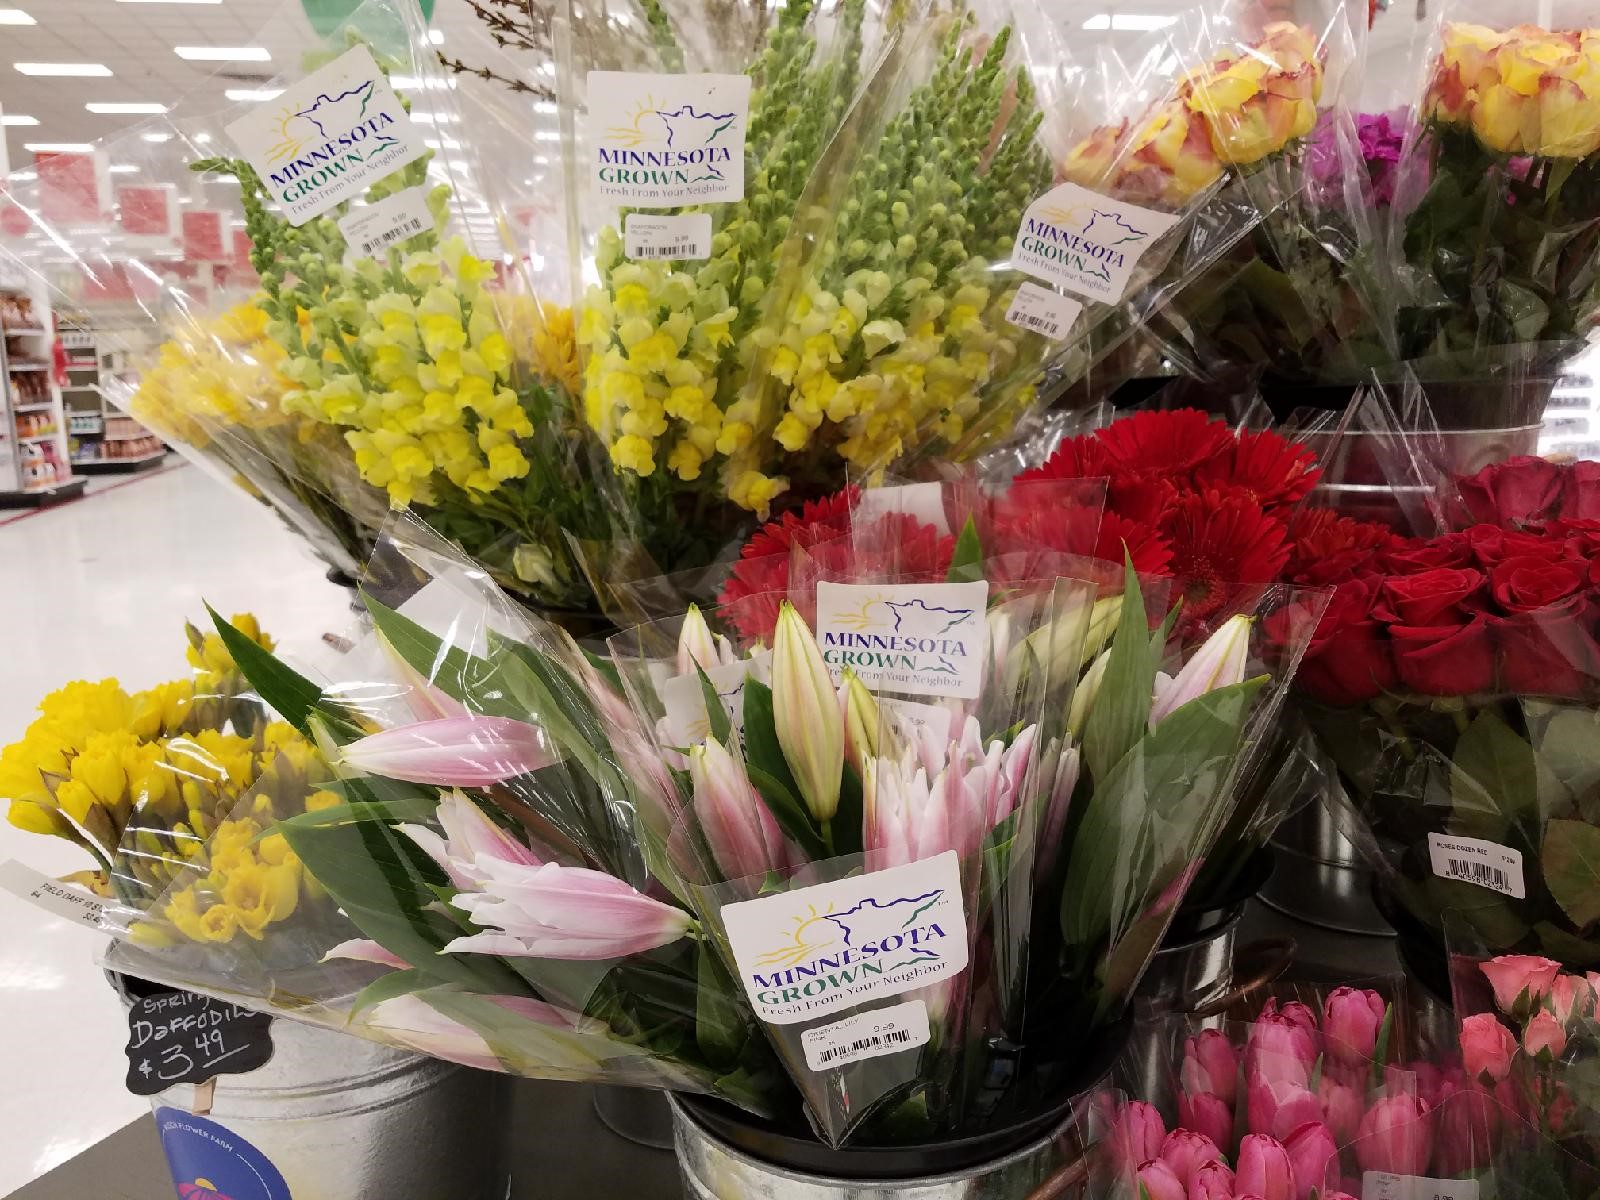 fresh cut flowers in target with minnesota grown logo